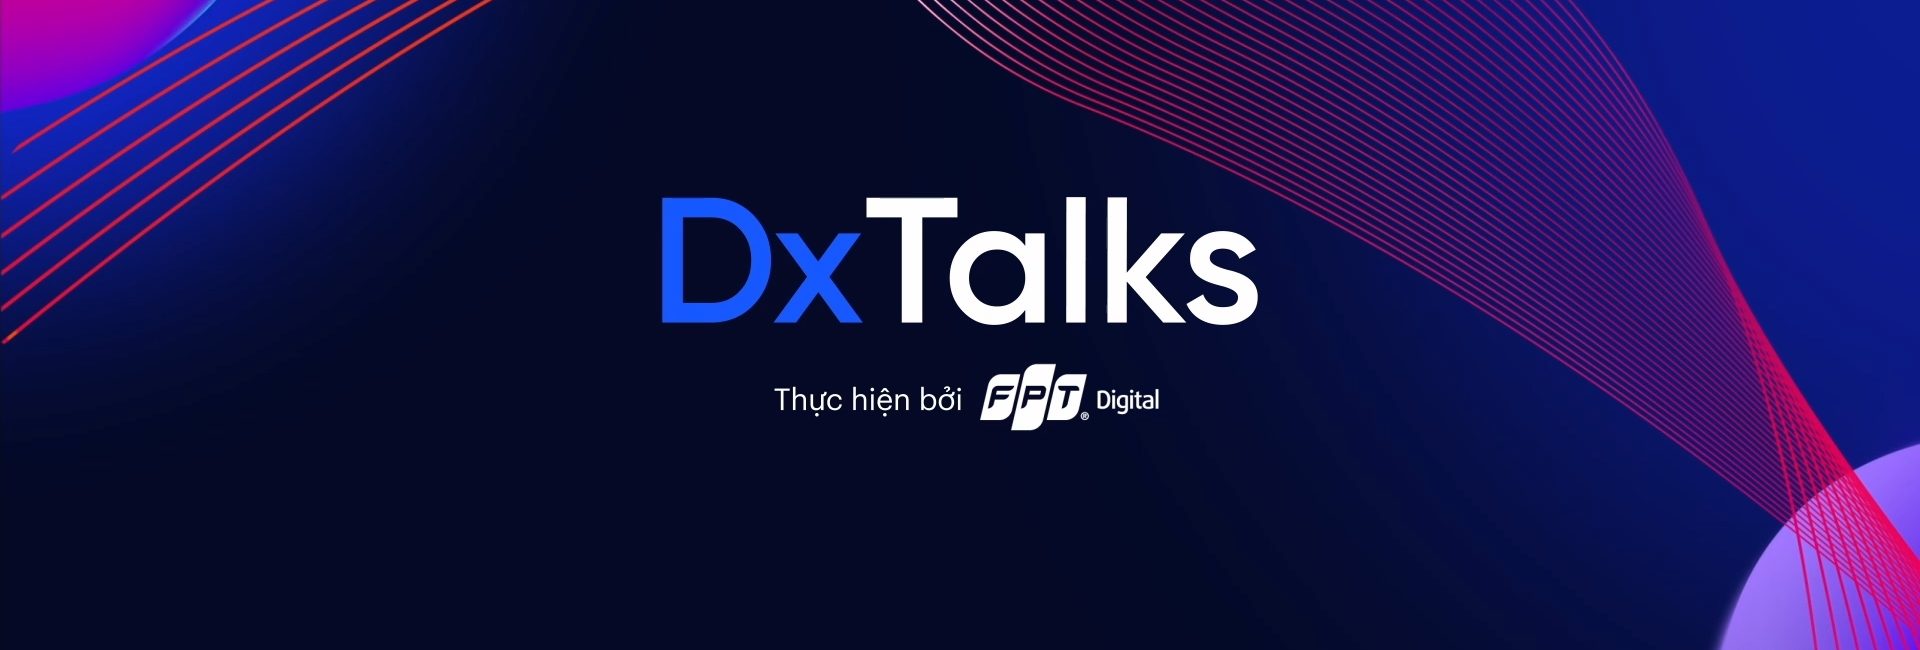 DxTalks Ep03: “Digital transformation in SMEs”